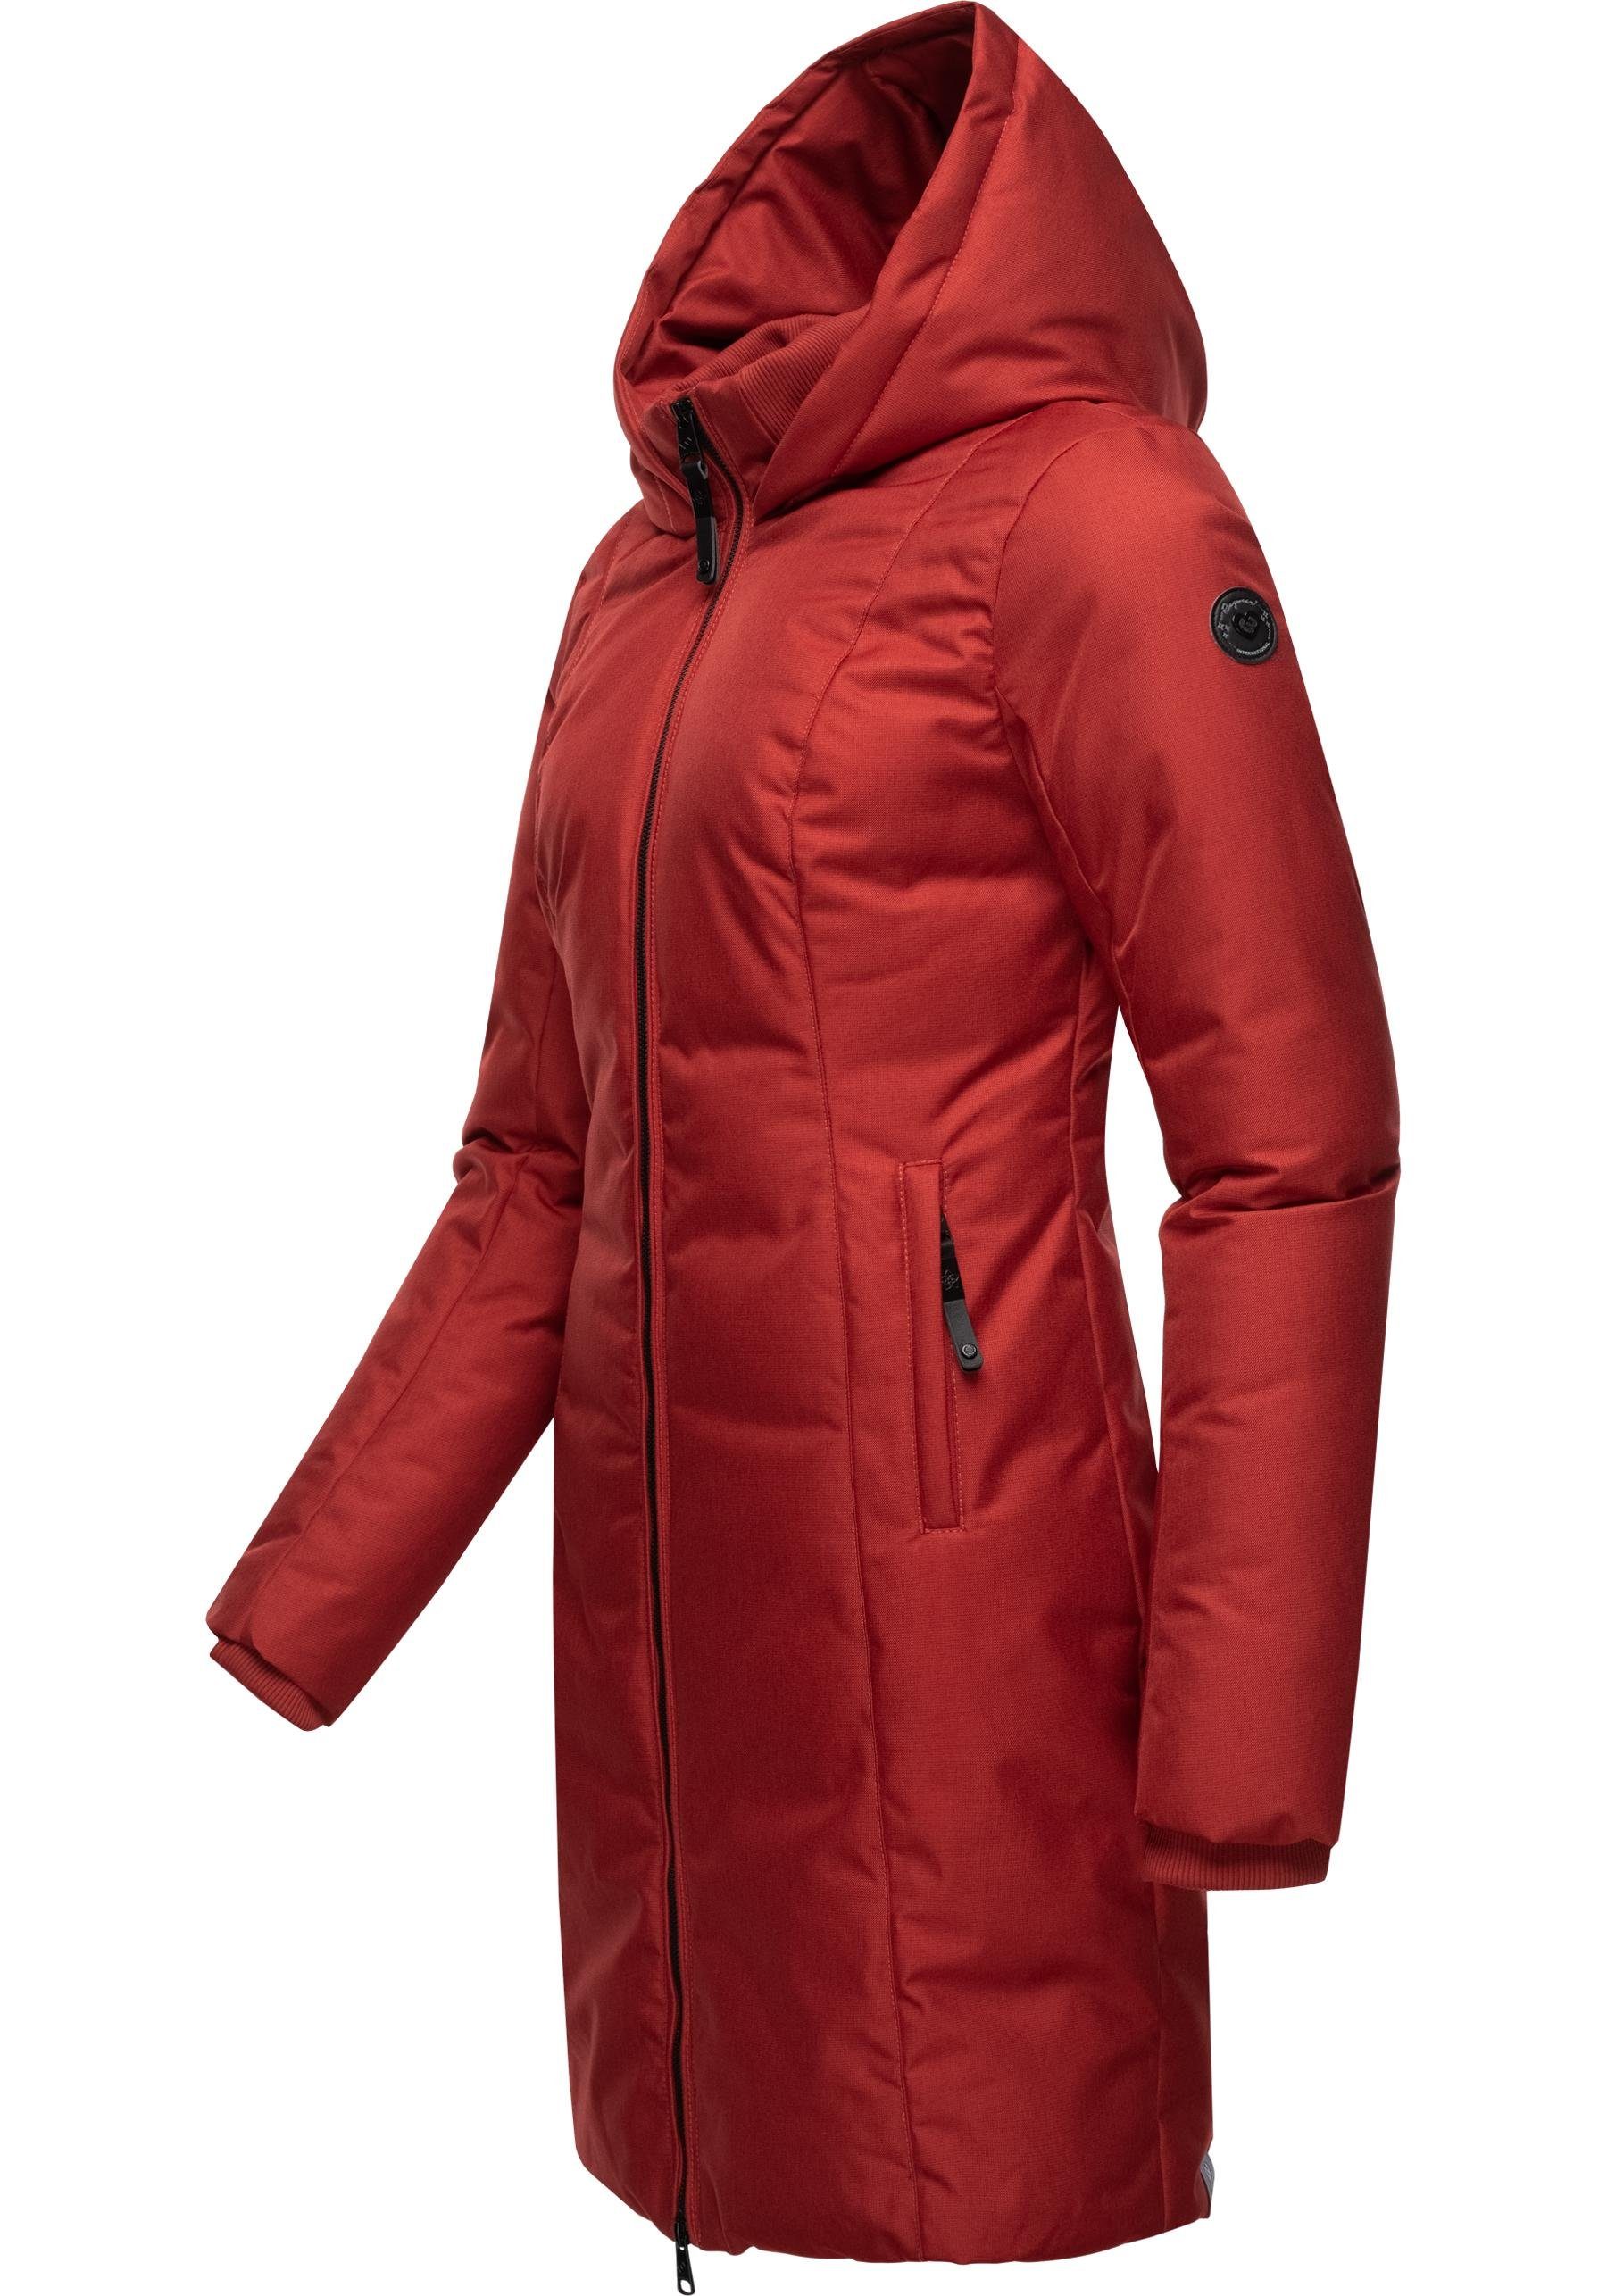 Winterparka mit Wintermantel Kapuze Ragwear stylischer großer rot Amarri